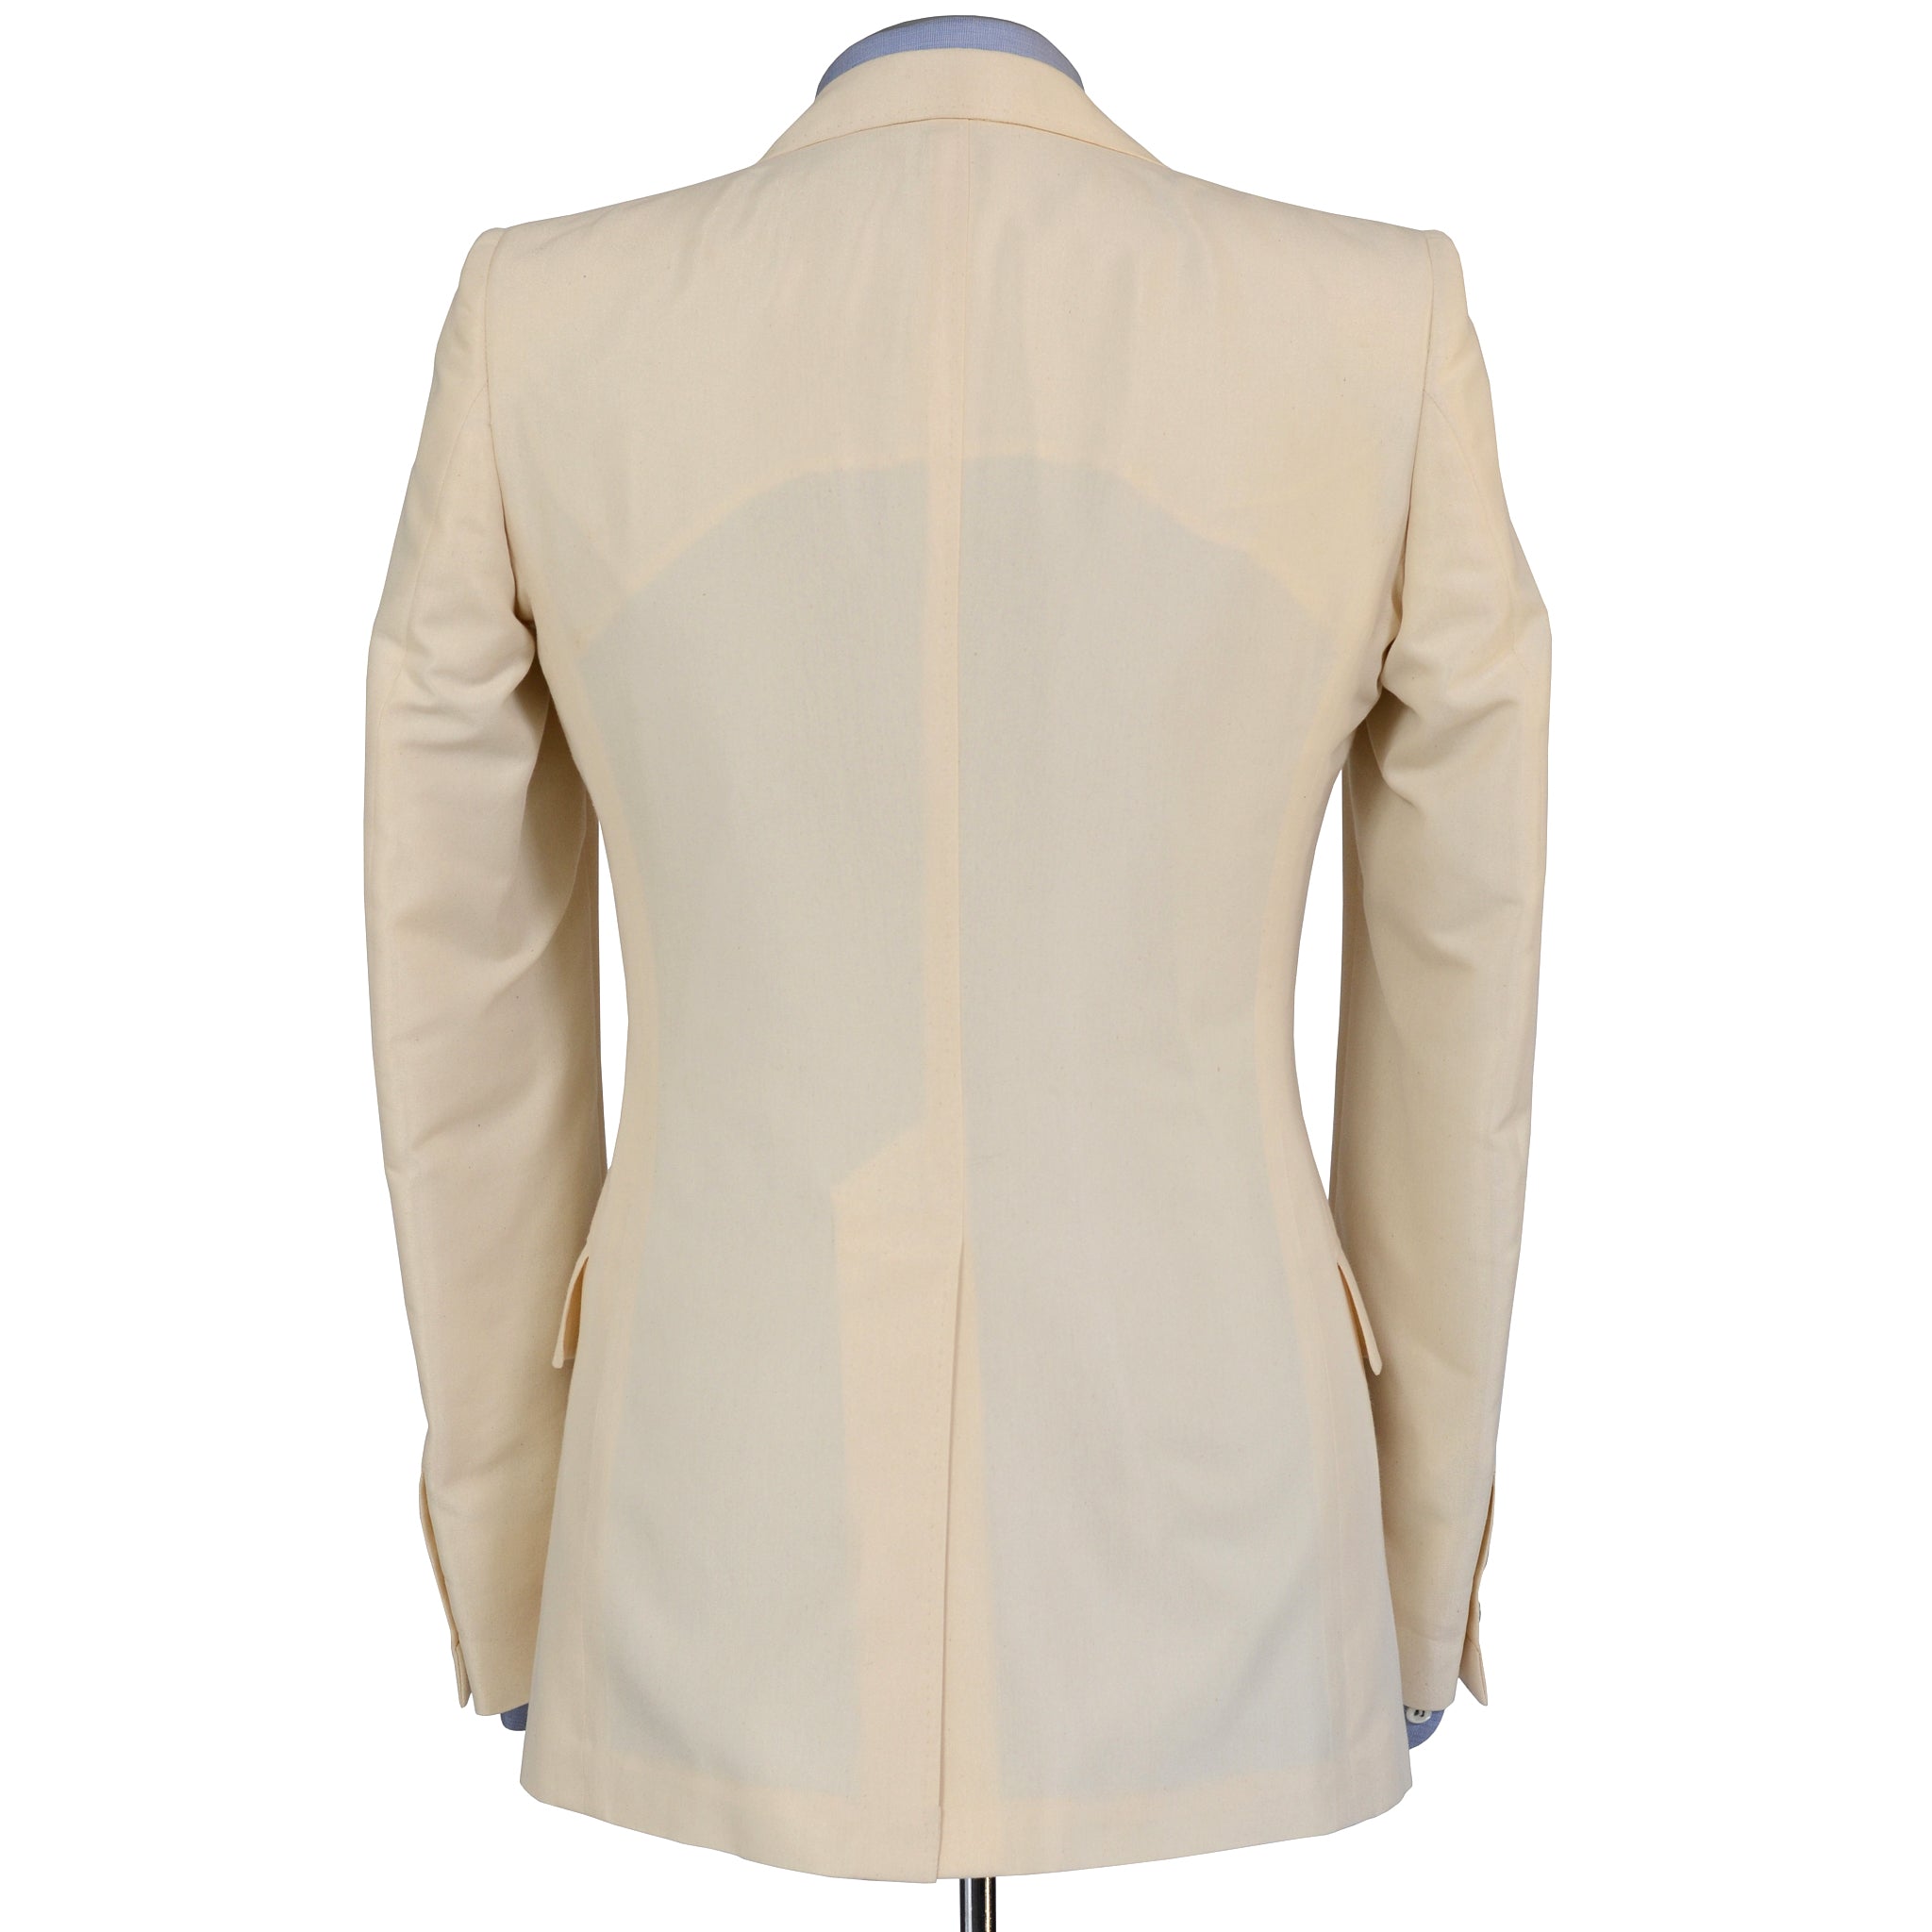 D'AVENZA Roma Handmade Cream Cotton Blend Blazer Jacket EU 44 NEW US 34 D'AVENZA